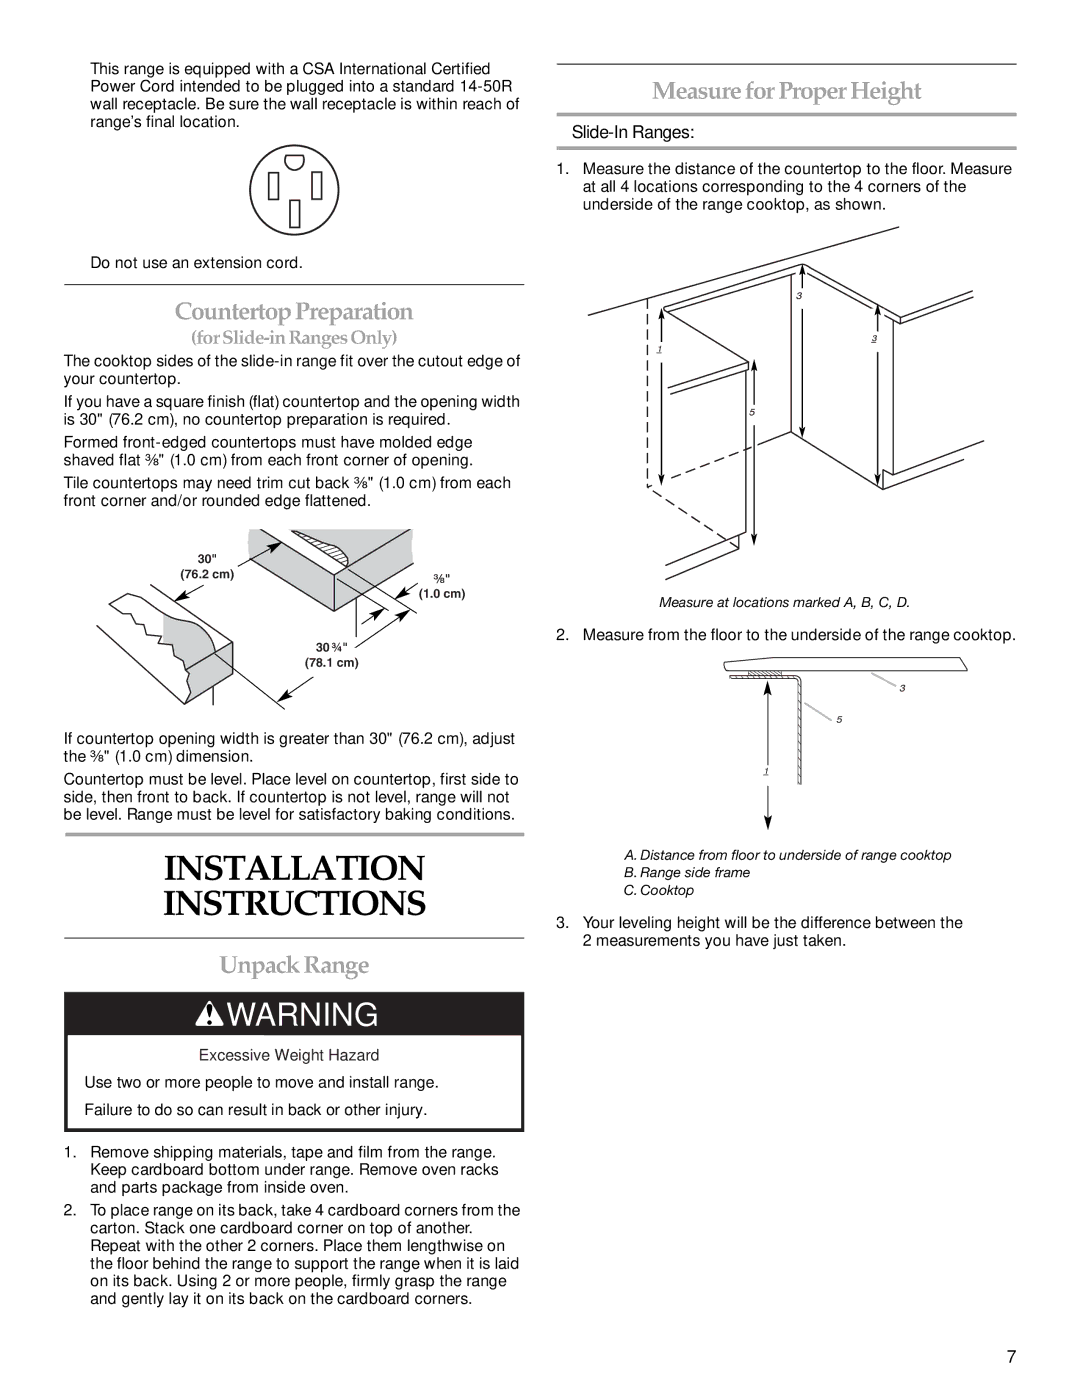 KitchenAid W10246119C Installation Instructions, CountertopPreparation Measurefor Proper Height, Unpack Range 